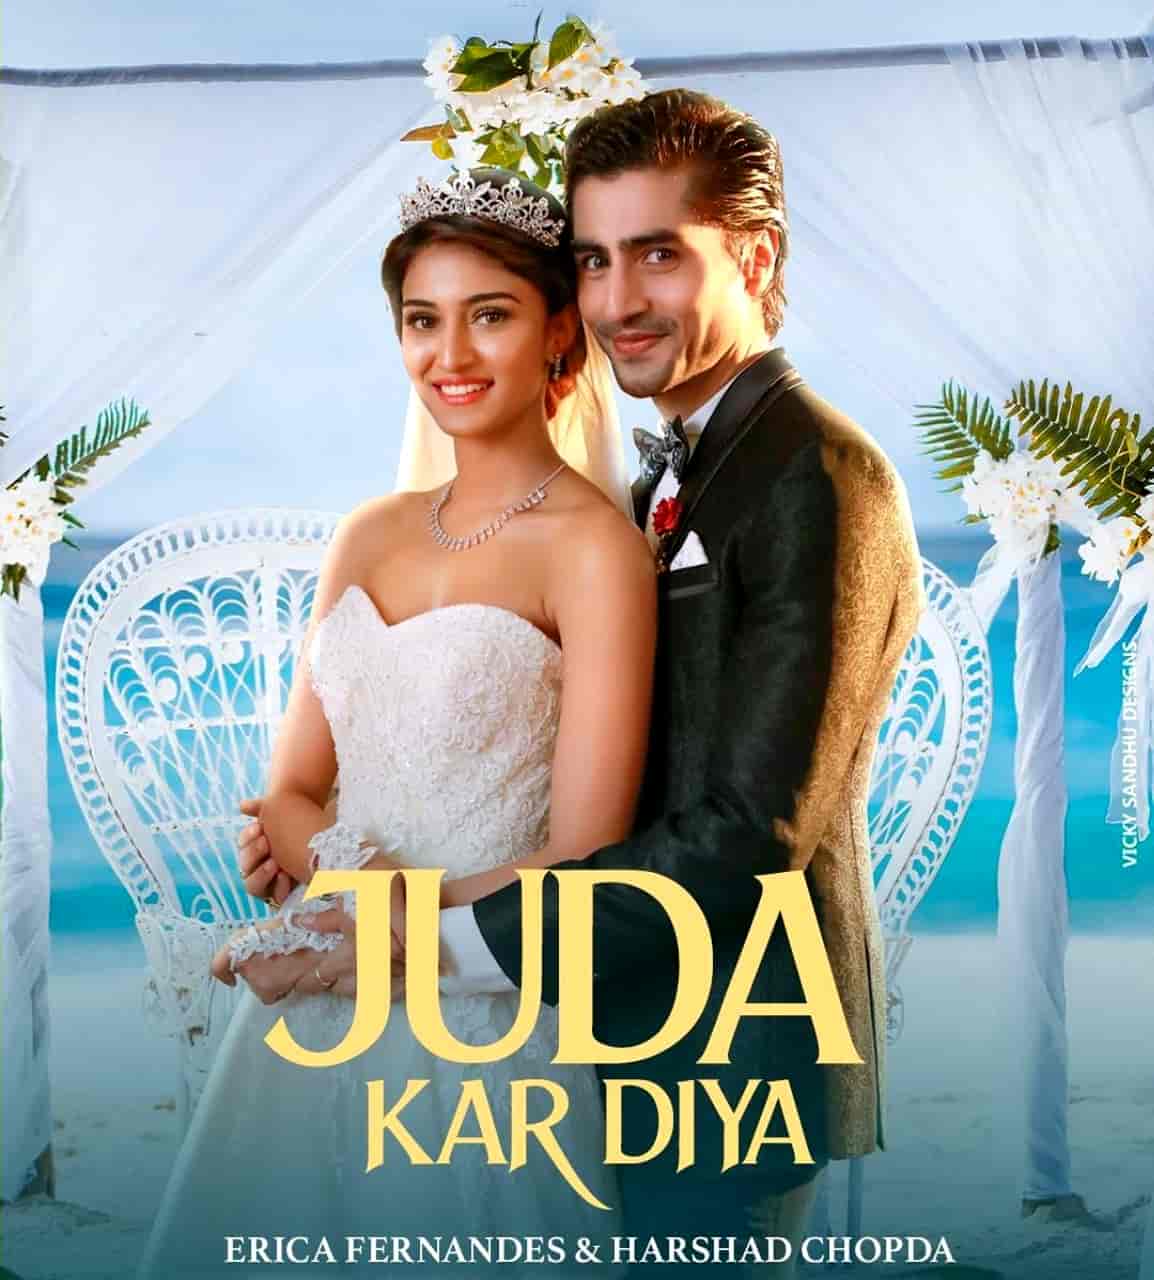 Juda Kar Diya Hindi Song Image Features Erica Fernandes and Harshad Chopda